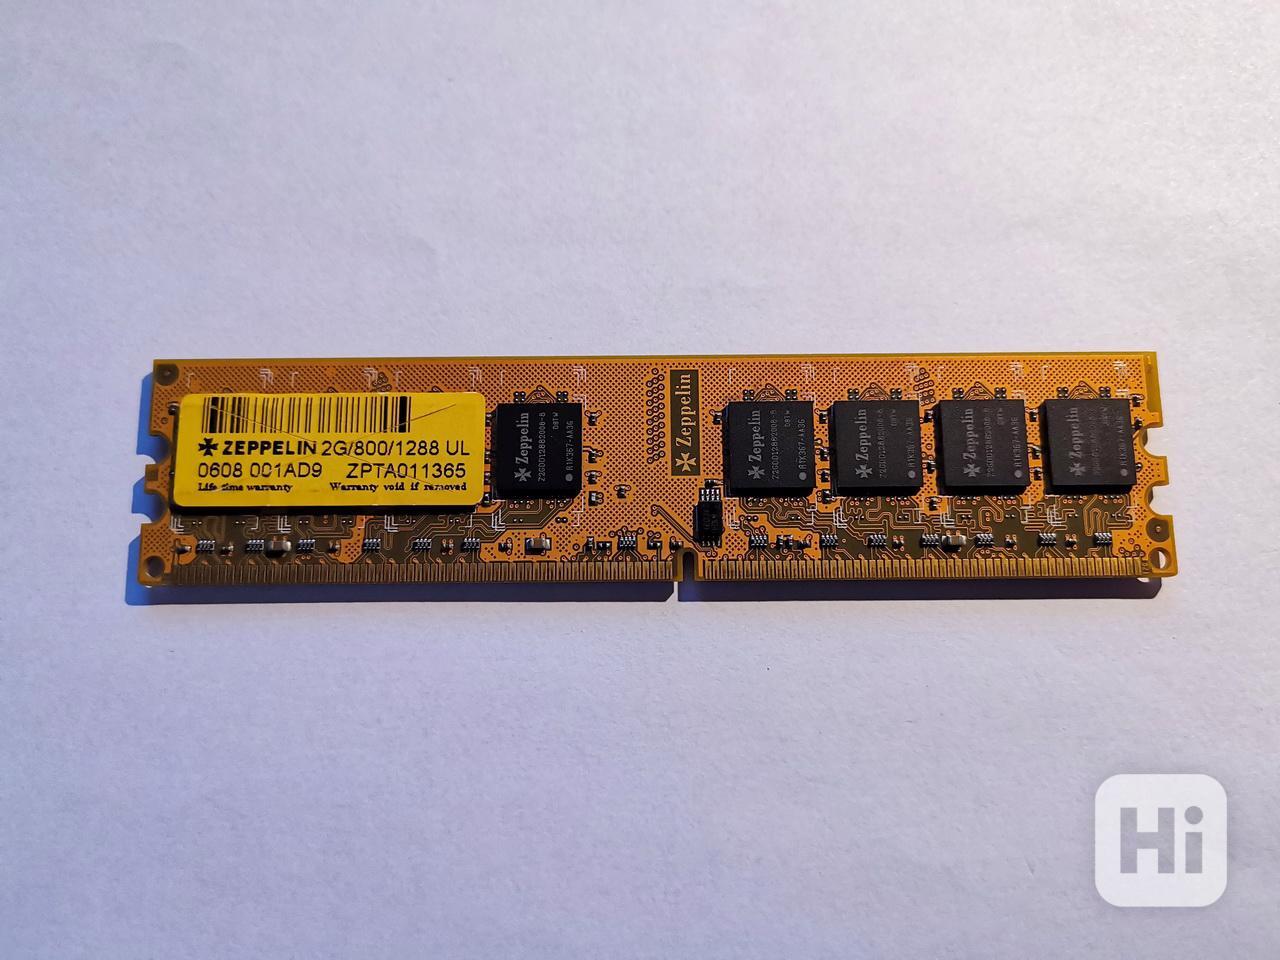 ZEPPELIN 2GB DDR2 800MHz RAM paměť pro PC - foto 1